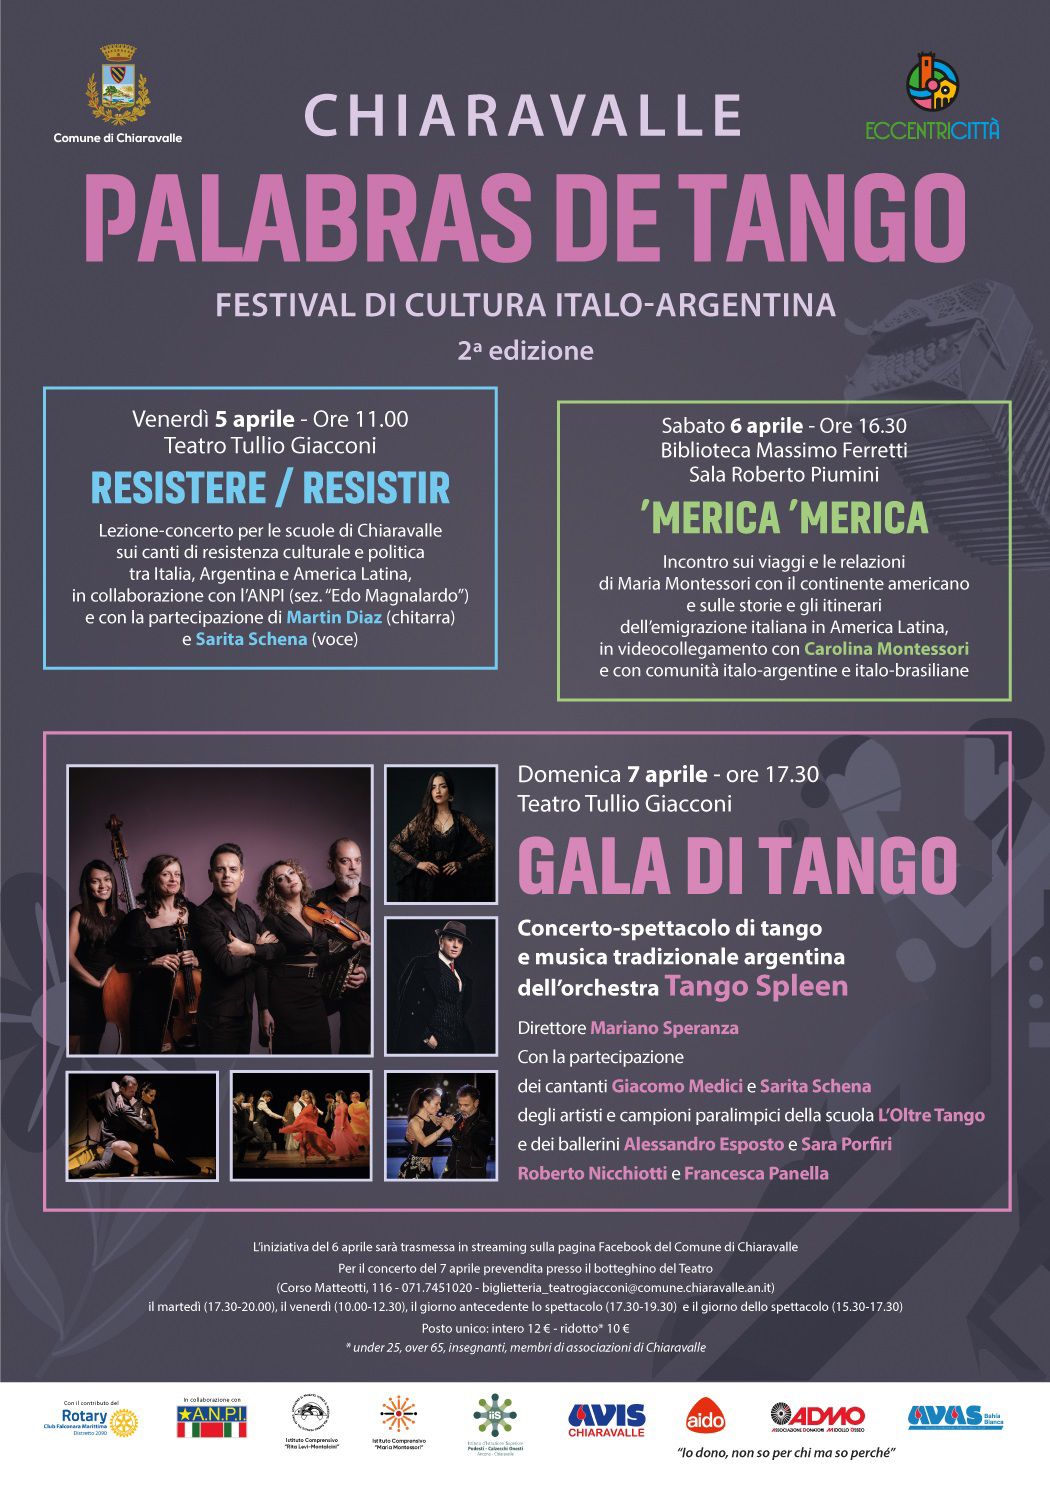 festival di cultura italo-argentina "Palabras de tango" a Chiaravalle